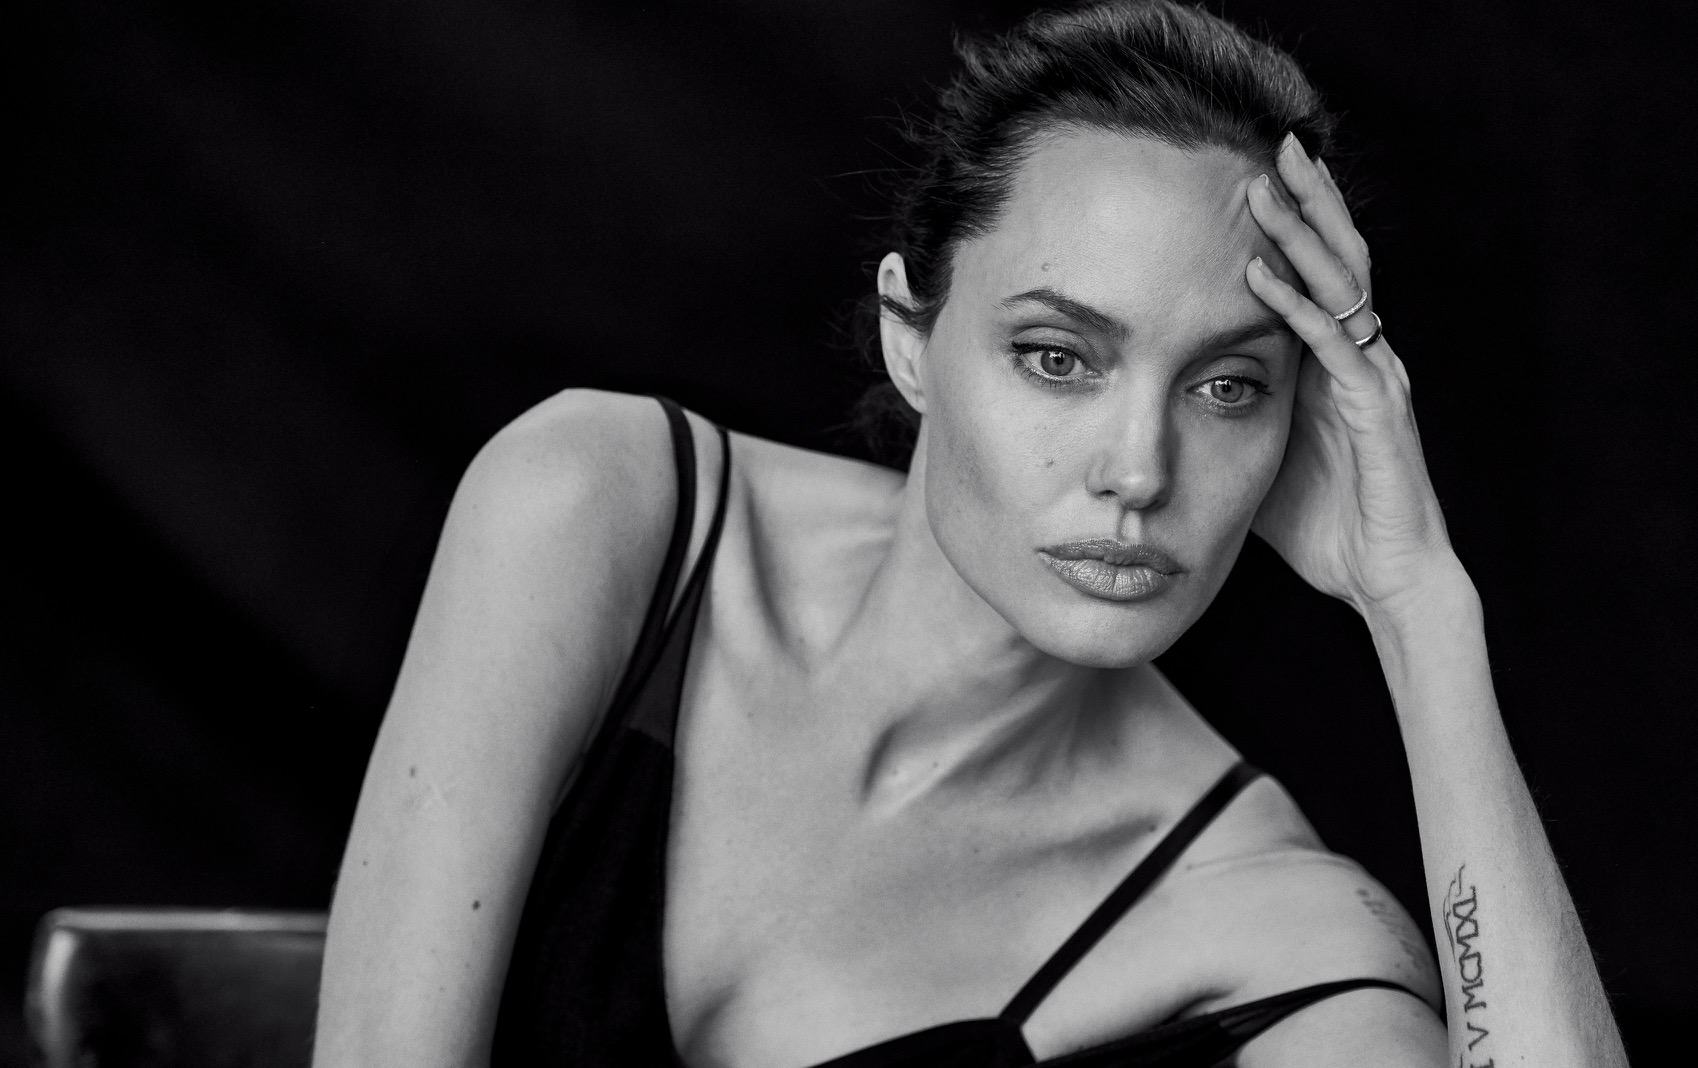 Angelina Jolie se desquita con Hollywood: “Hoy no sería actriz”